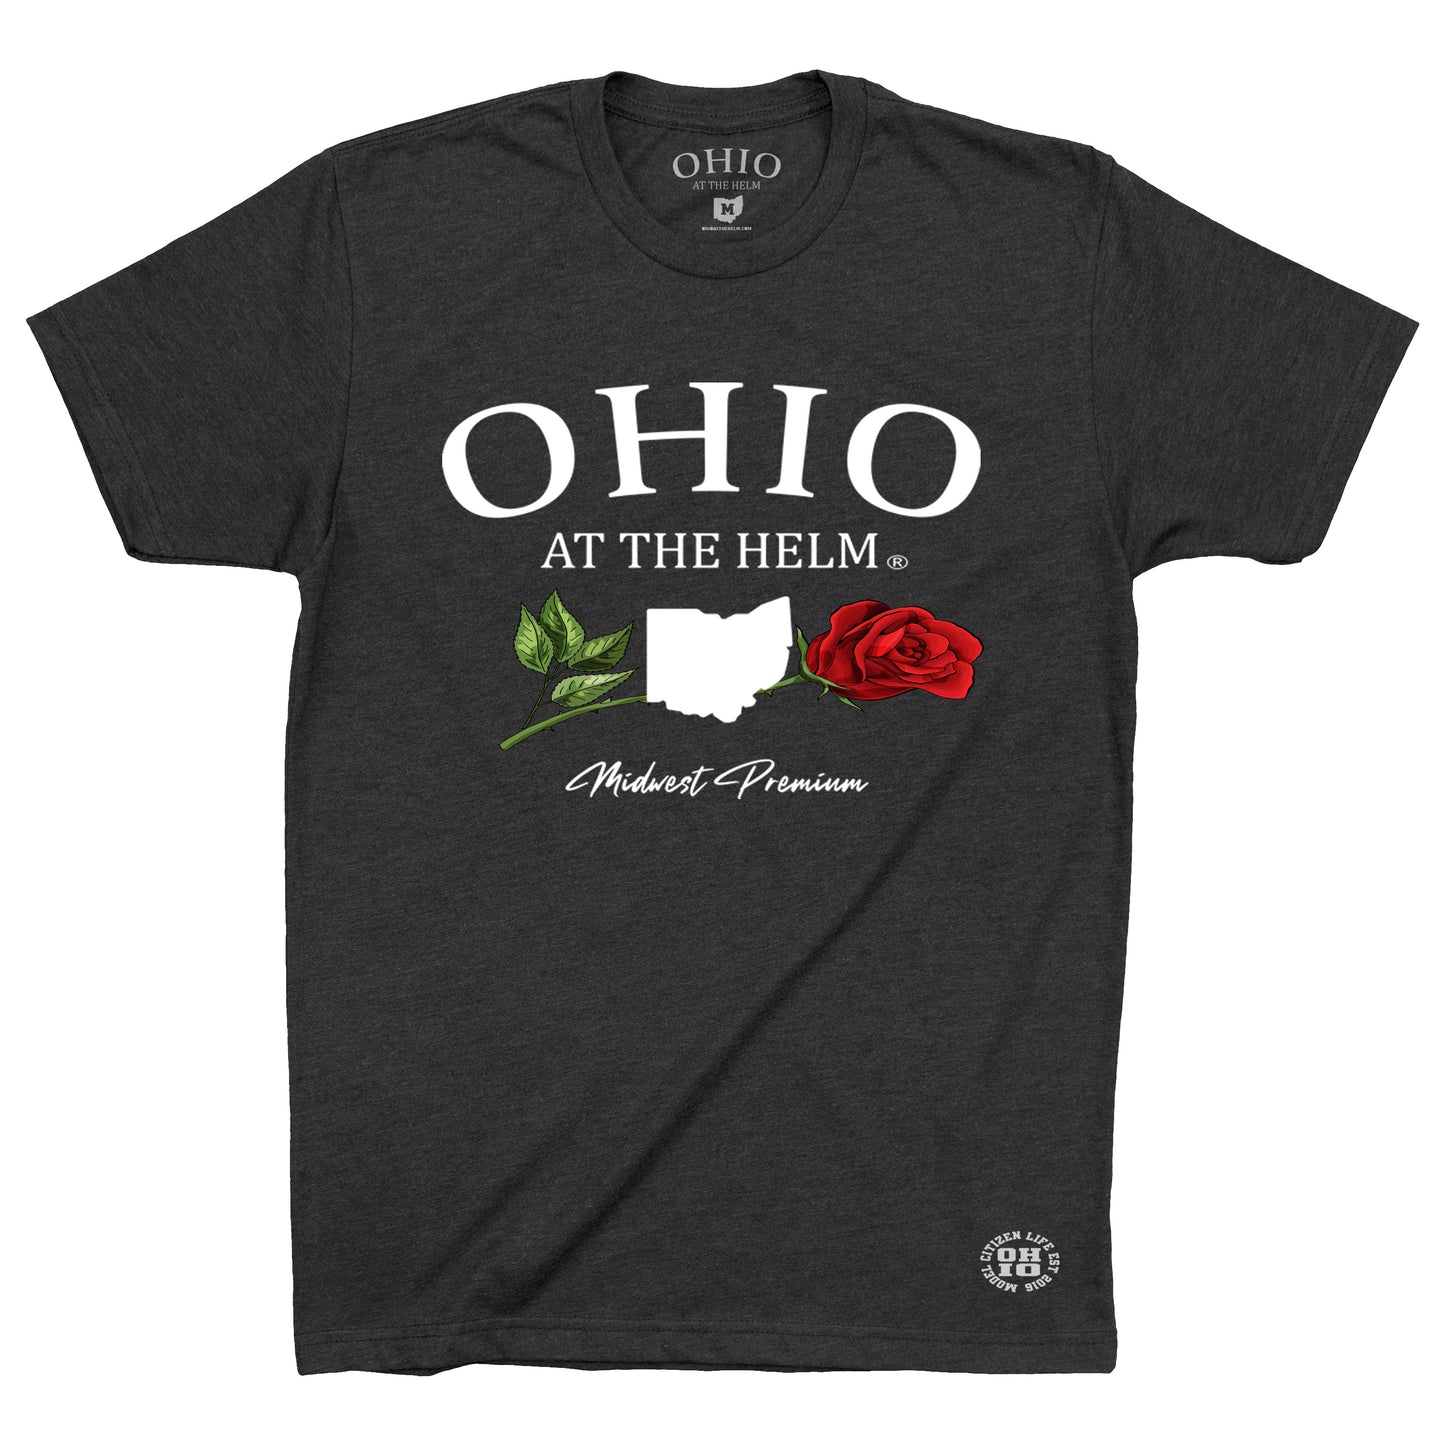 NEW! Ohio At The Helm Signature Logo Tee